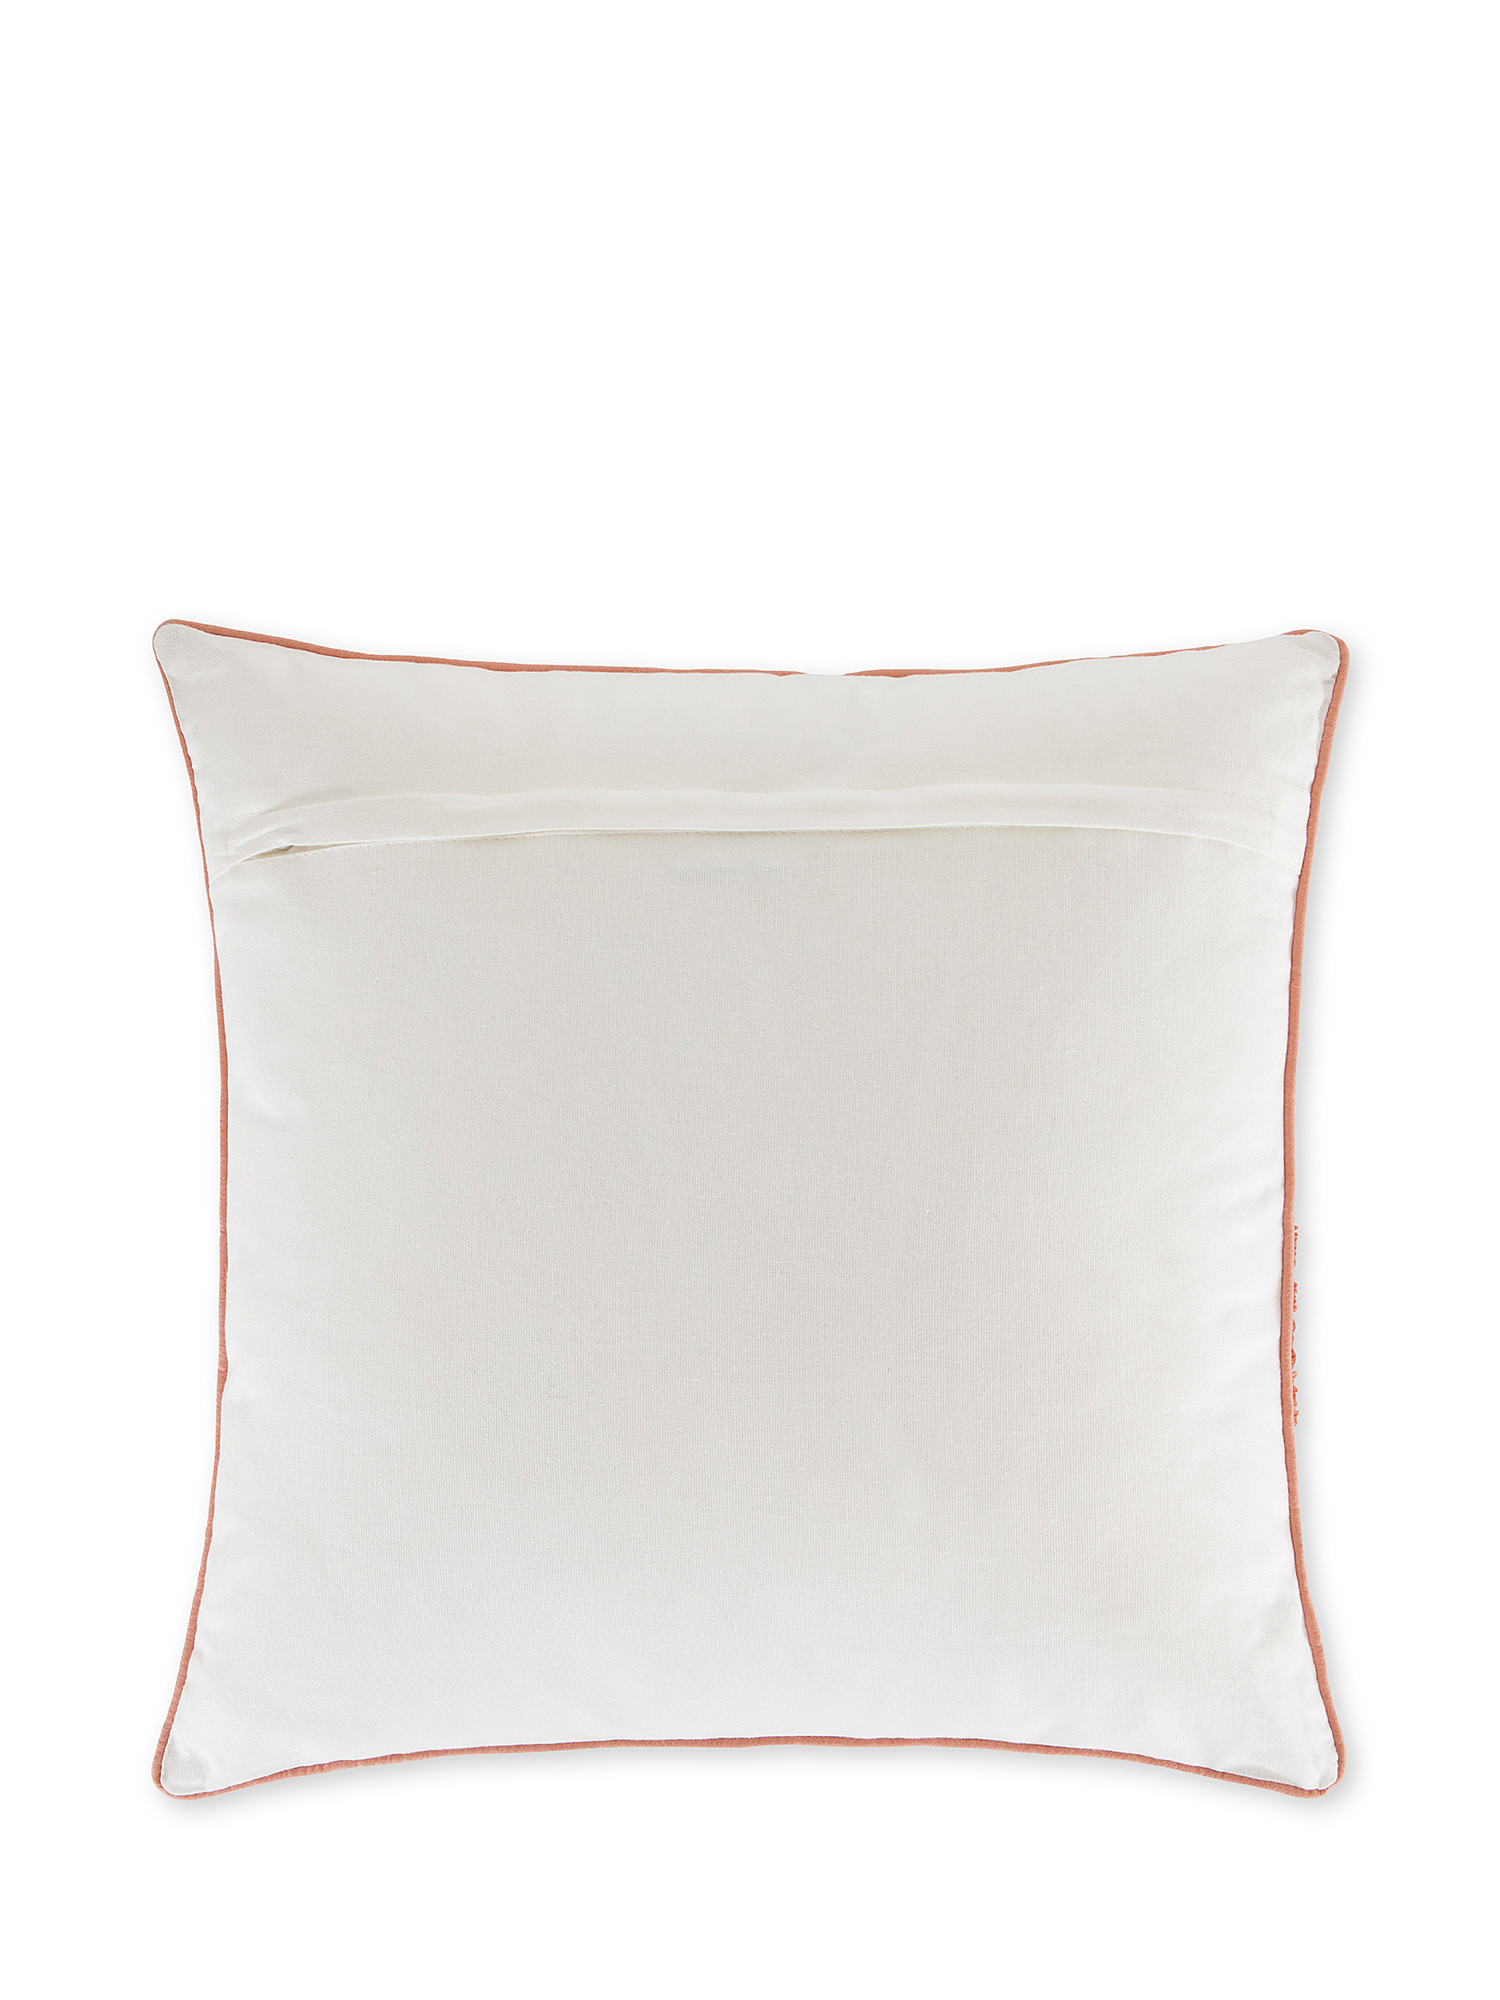 Horse embroidery cushion 45x45cm, White, large image number 1